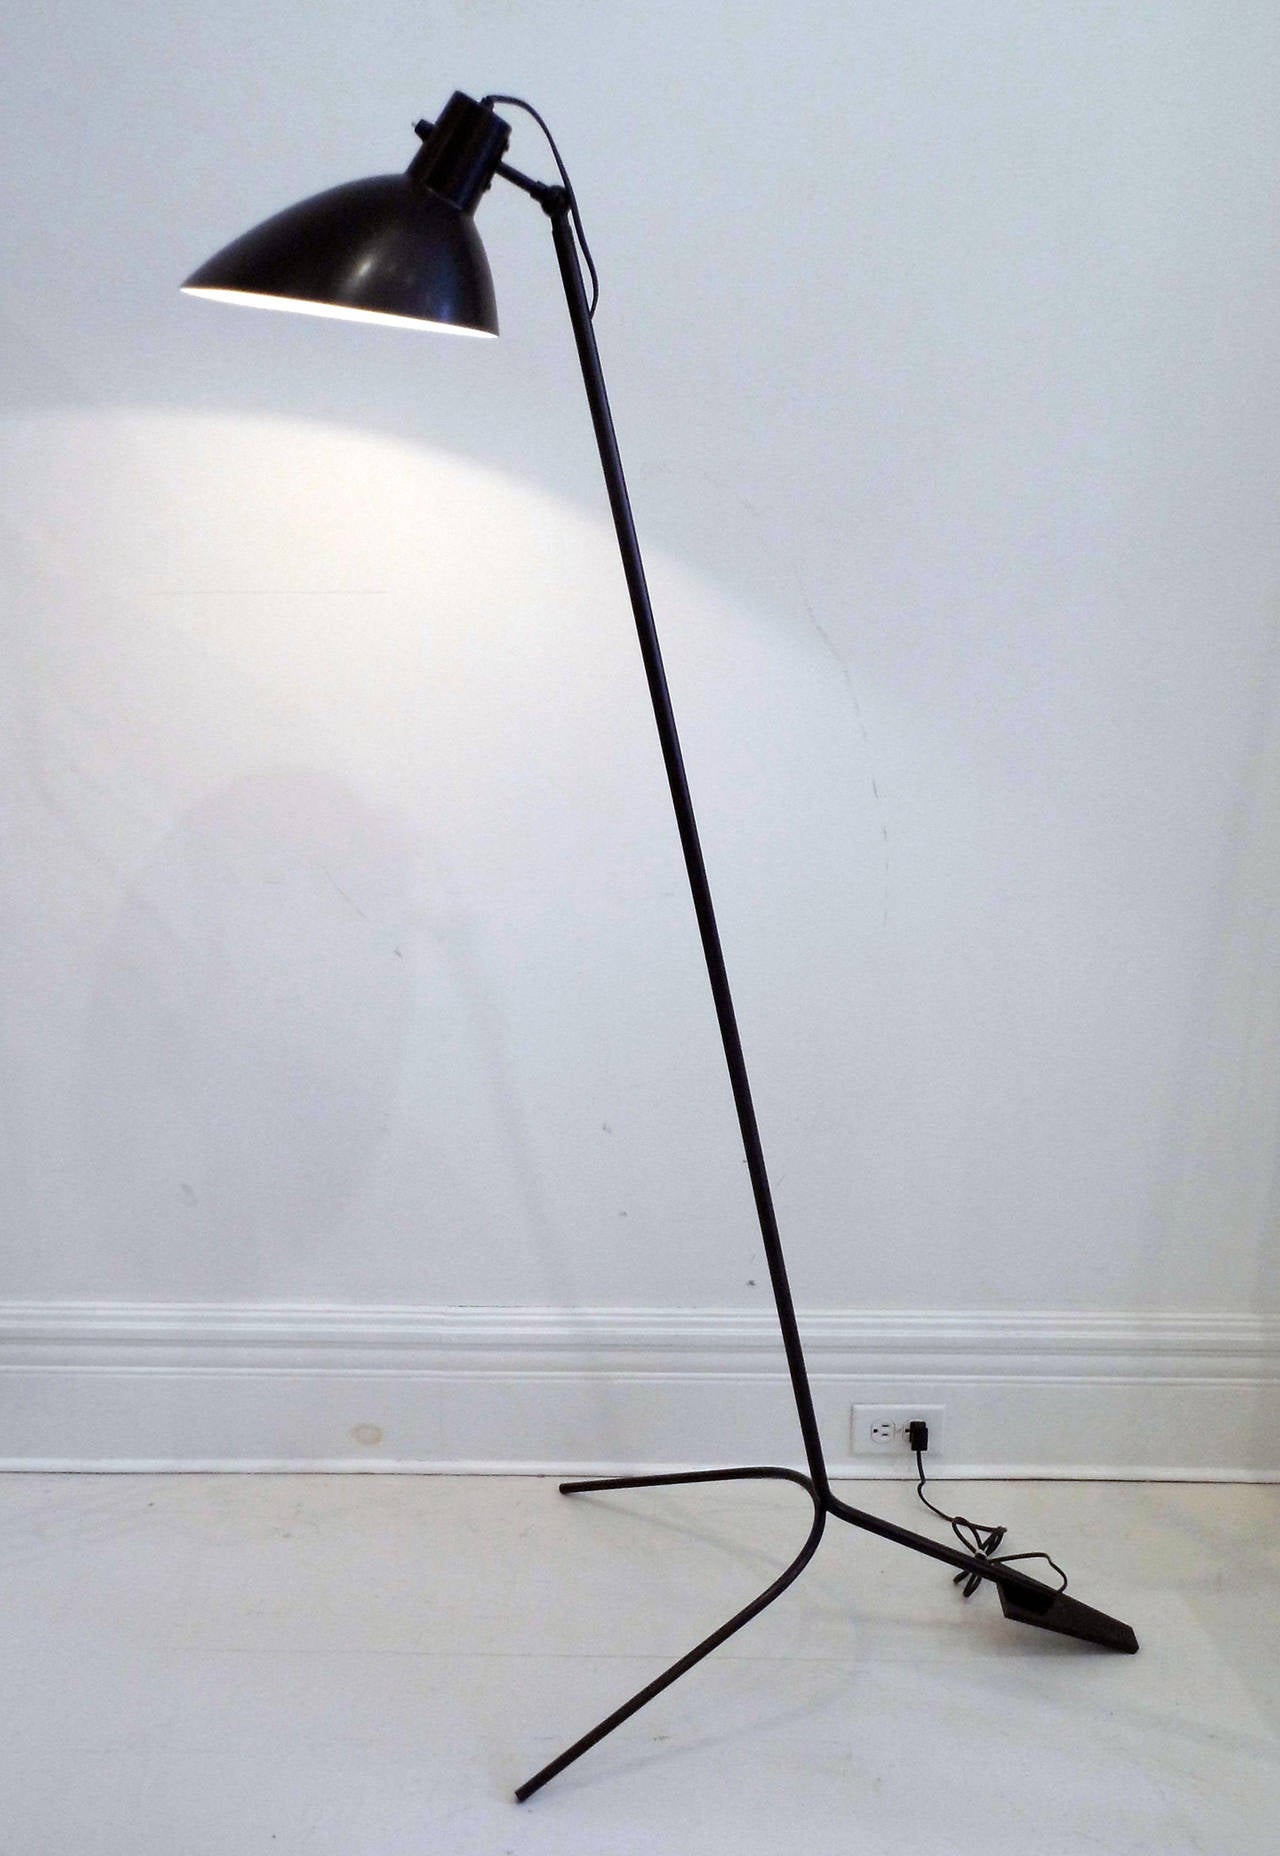 Black enameled floor lamp designed by Vittoriano Vigano for Arteluce.
Adjustable shade, new edition.